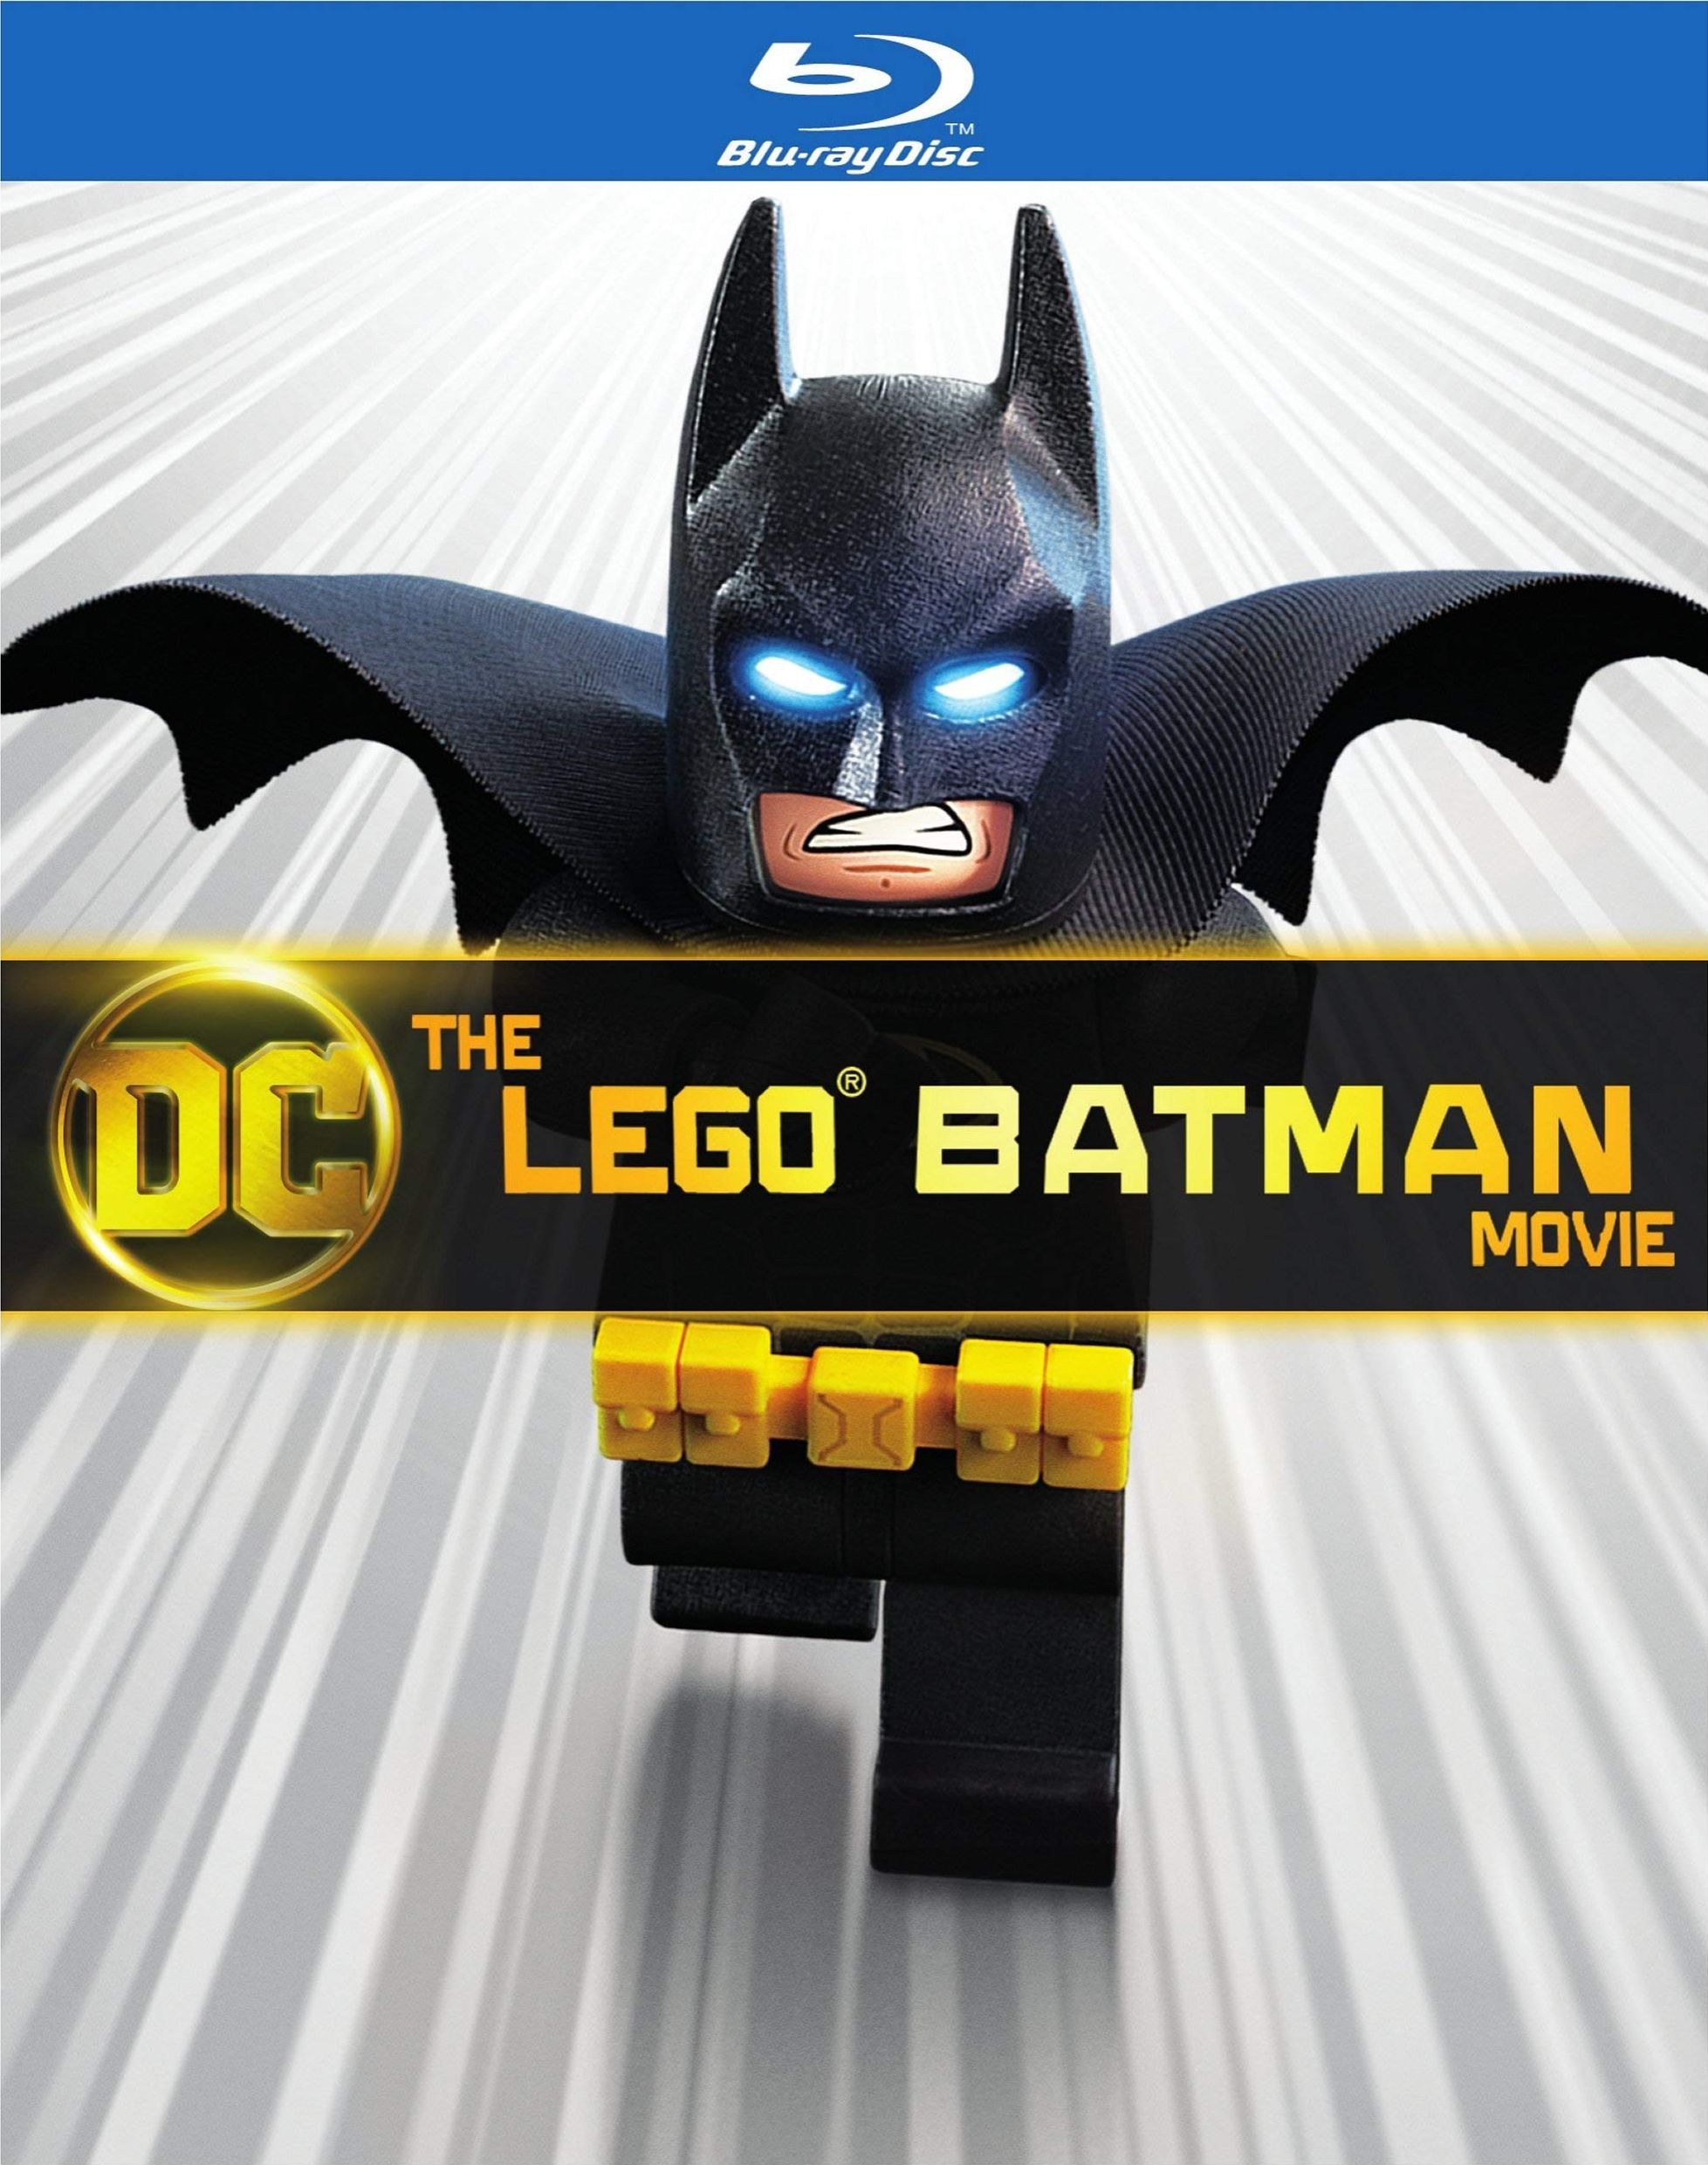 The Lego Batman Movie DVD Release Date June 13, 2017